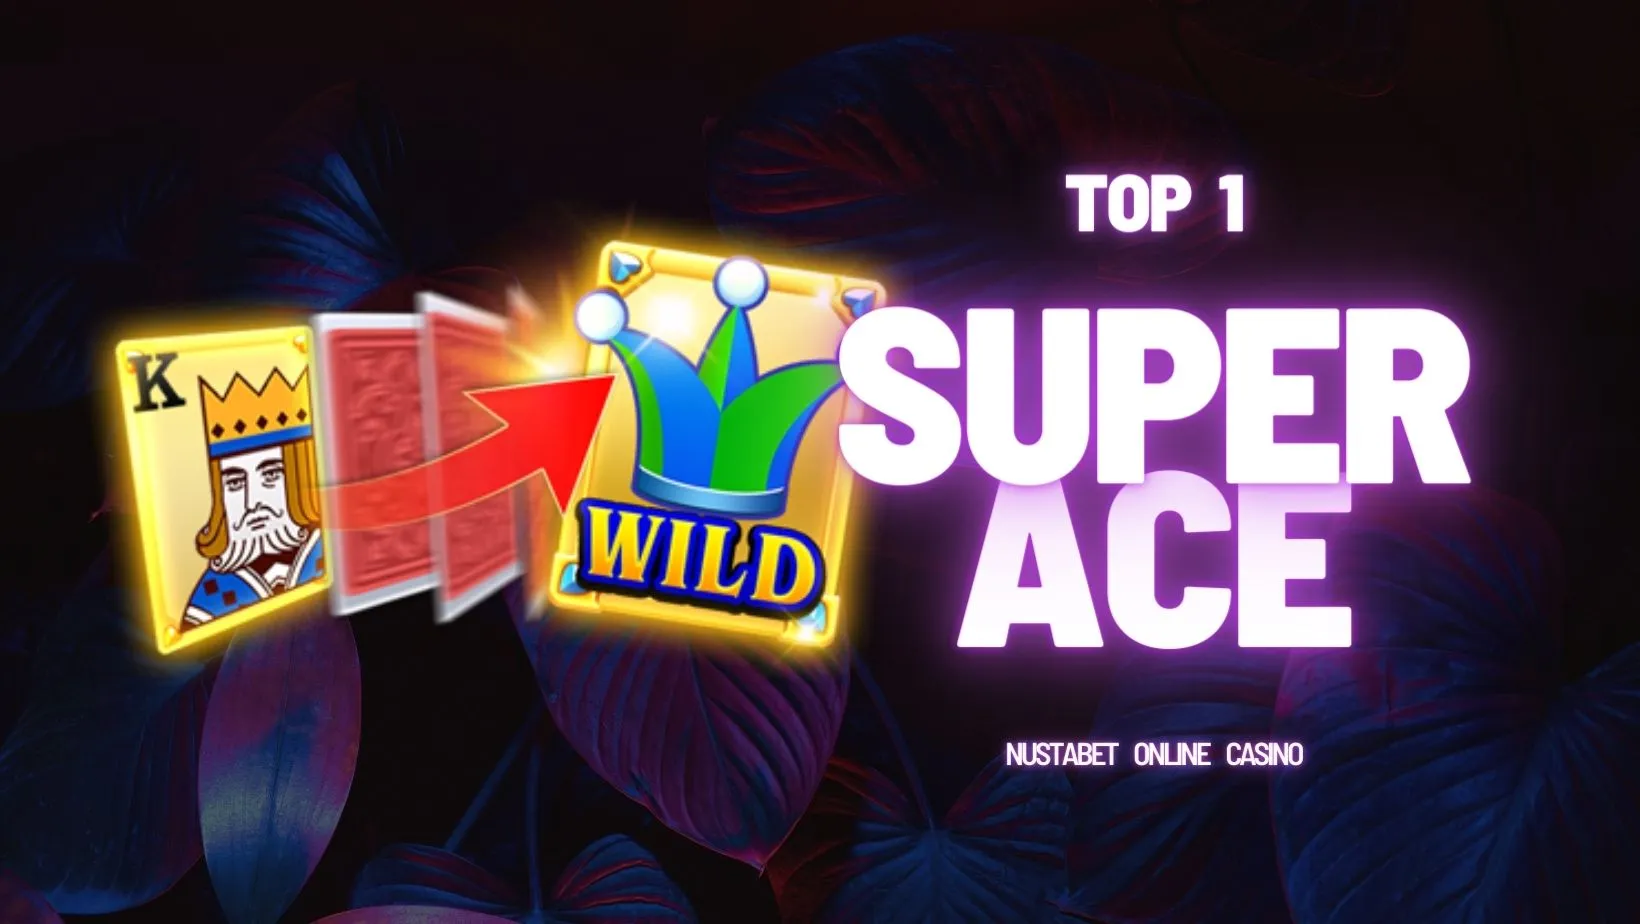 Super Ace | Jili Slot Games | Slot Online | Nustabet Online Casino